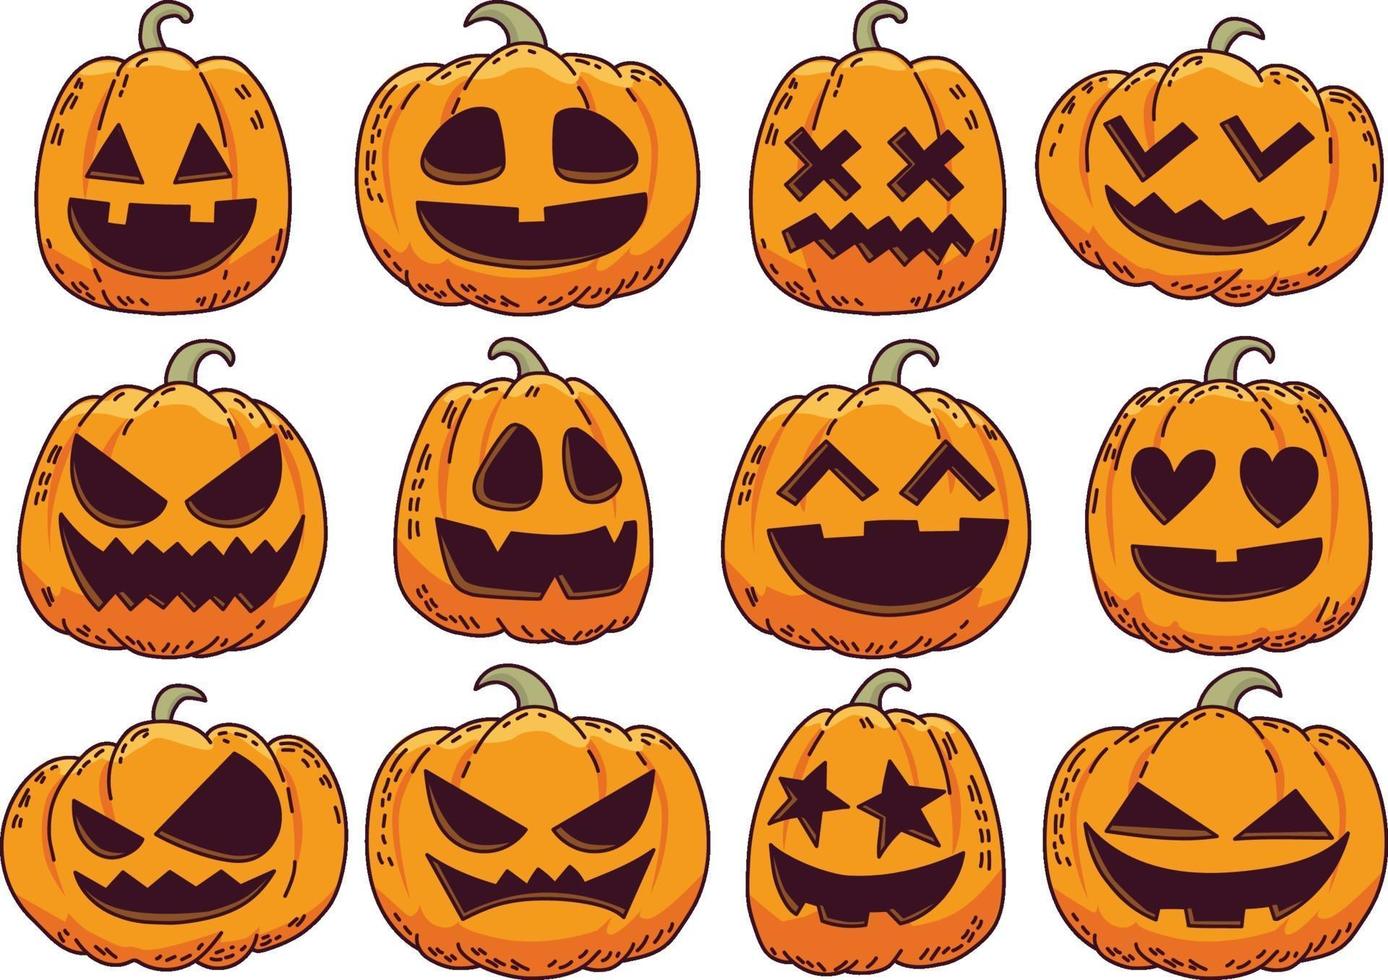 Happy Halloween Pumpkin Illustration vector